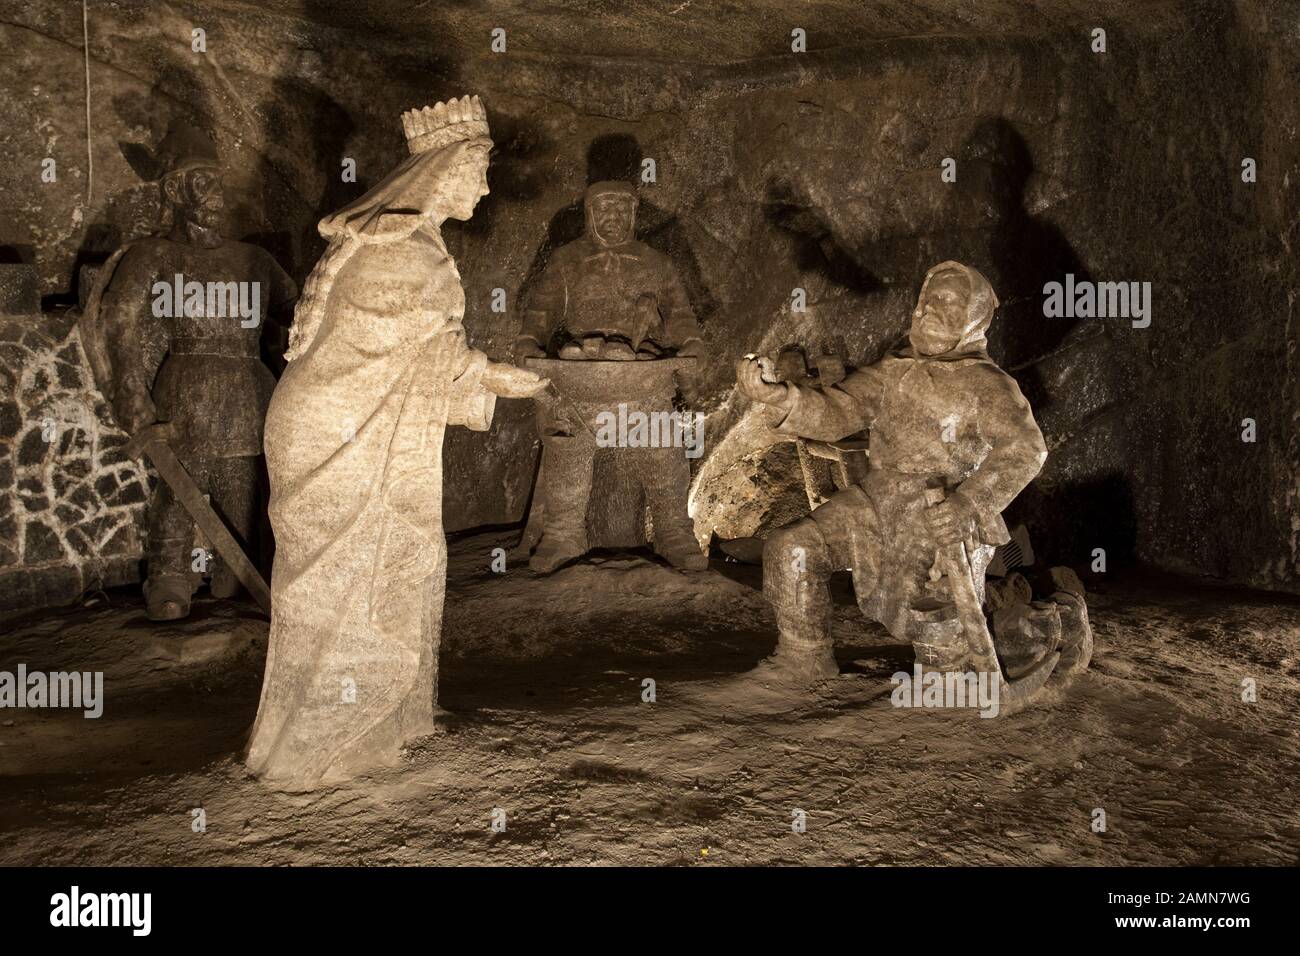 Exquisite figures carved from rock salt inside Wieliczka Salt Mine near Krakow, Poland Stock Photo